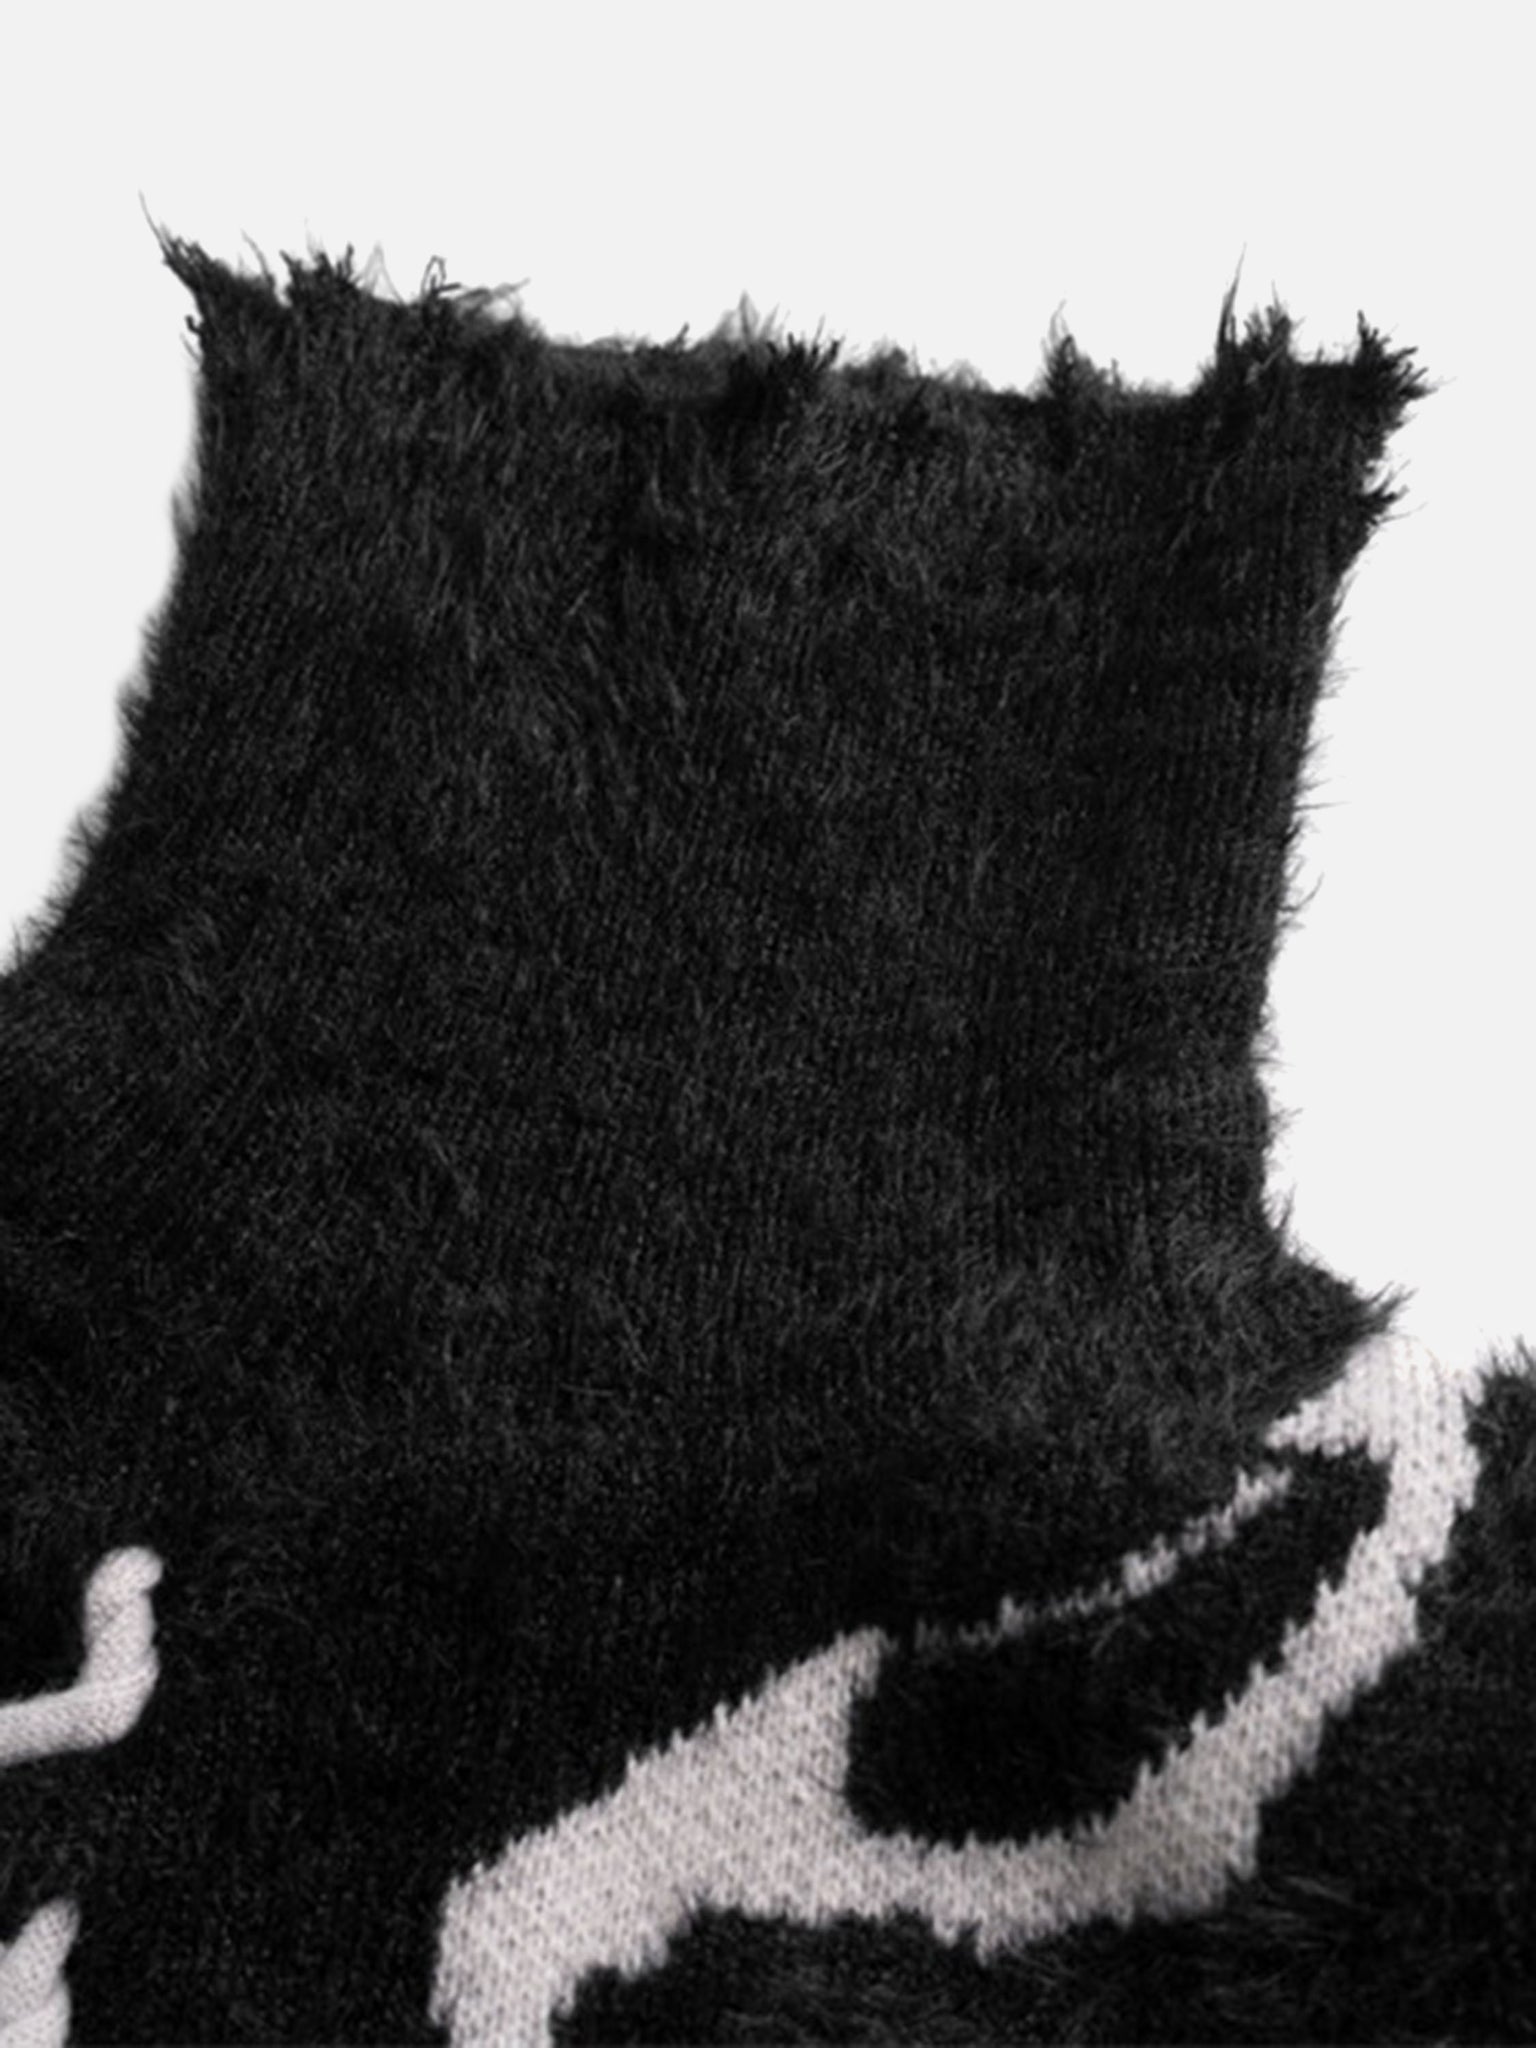 Thesupermade Rip Damage Design Turtleneck Knitwear Sweater - 1525